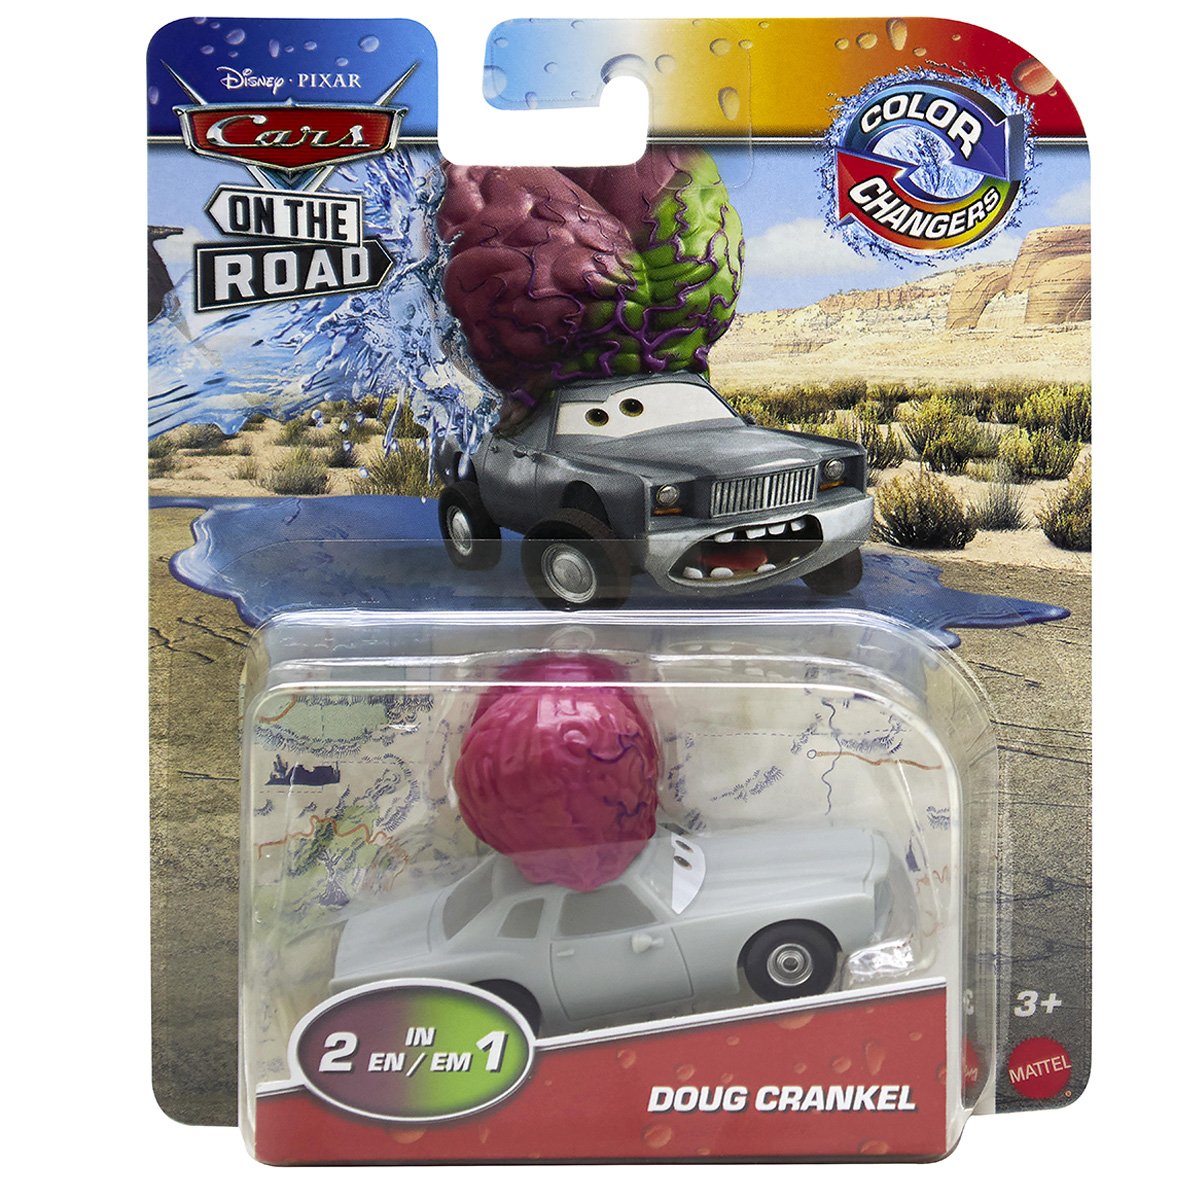 Masinuta Disney Cars, Color Changers, Doug Crankel, 1:55, HMD72 Masinute 2023-09-21